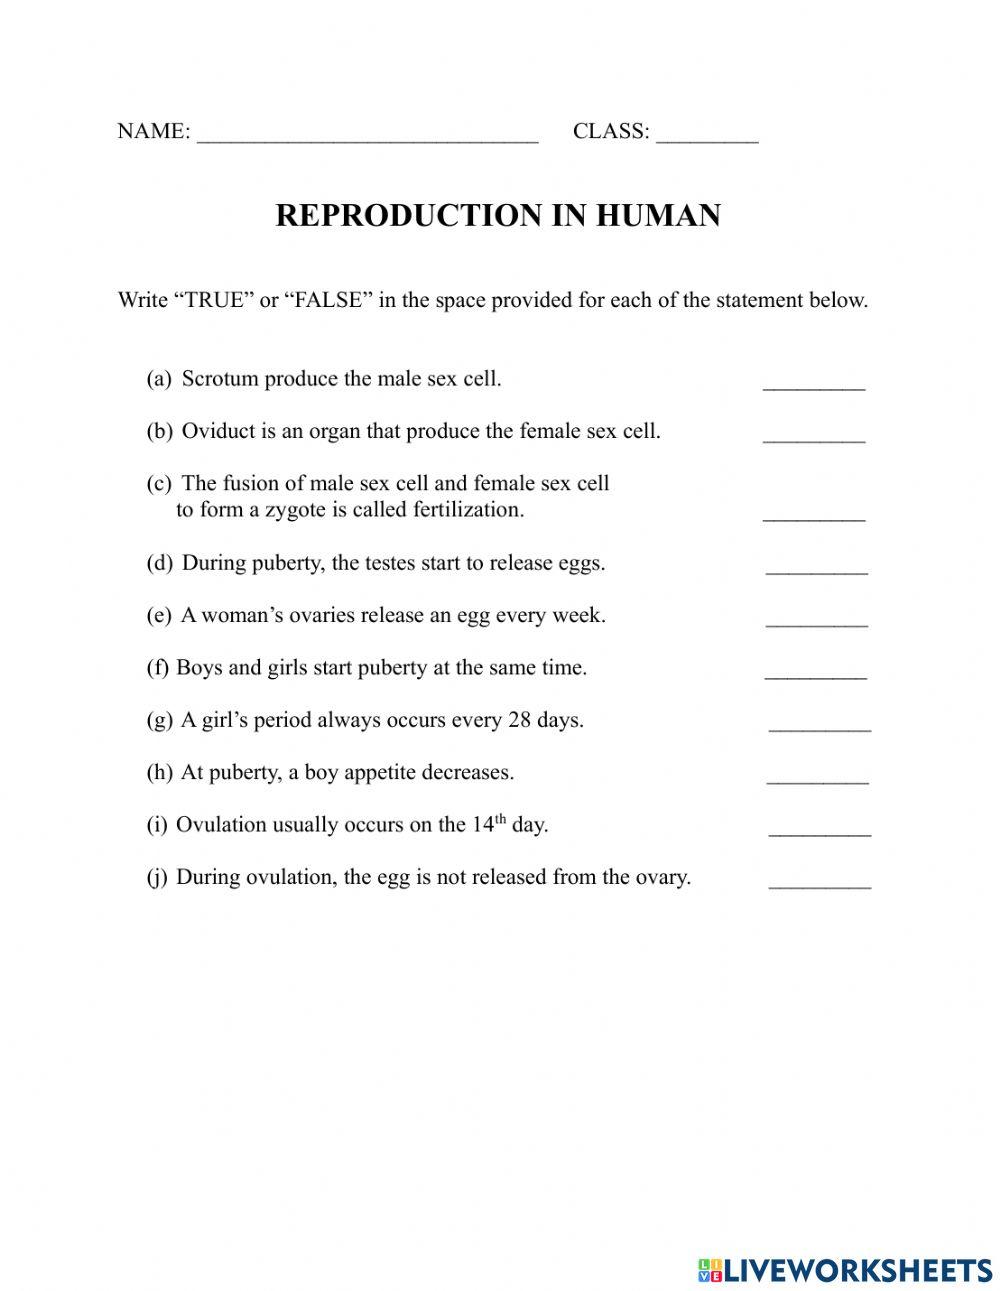 Recap: Reproduction in human